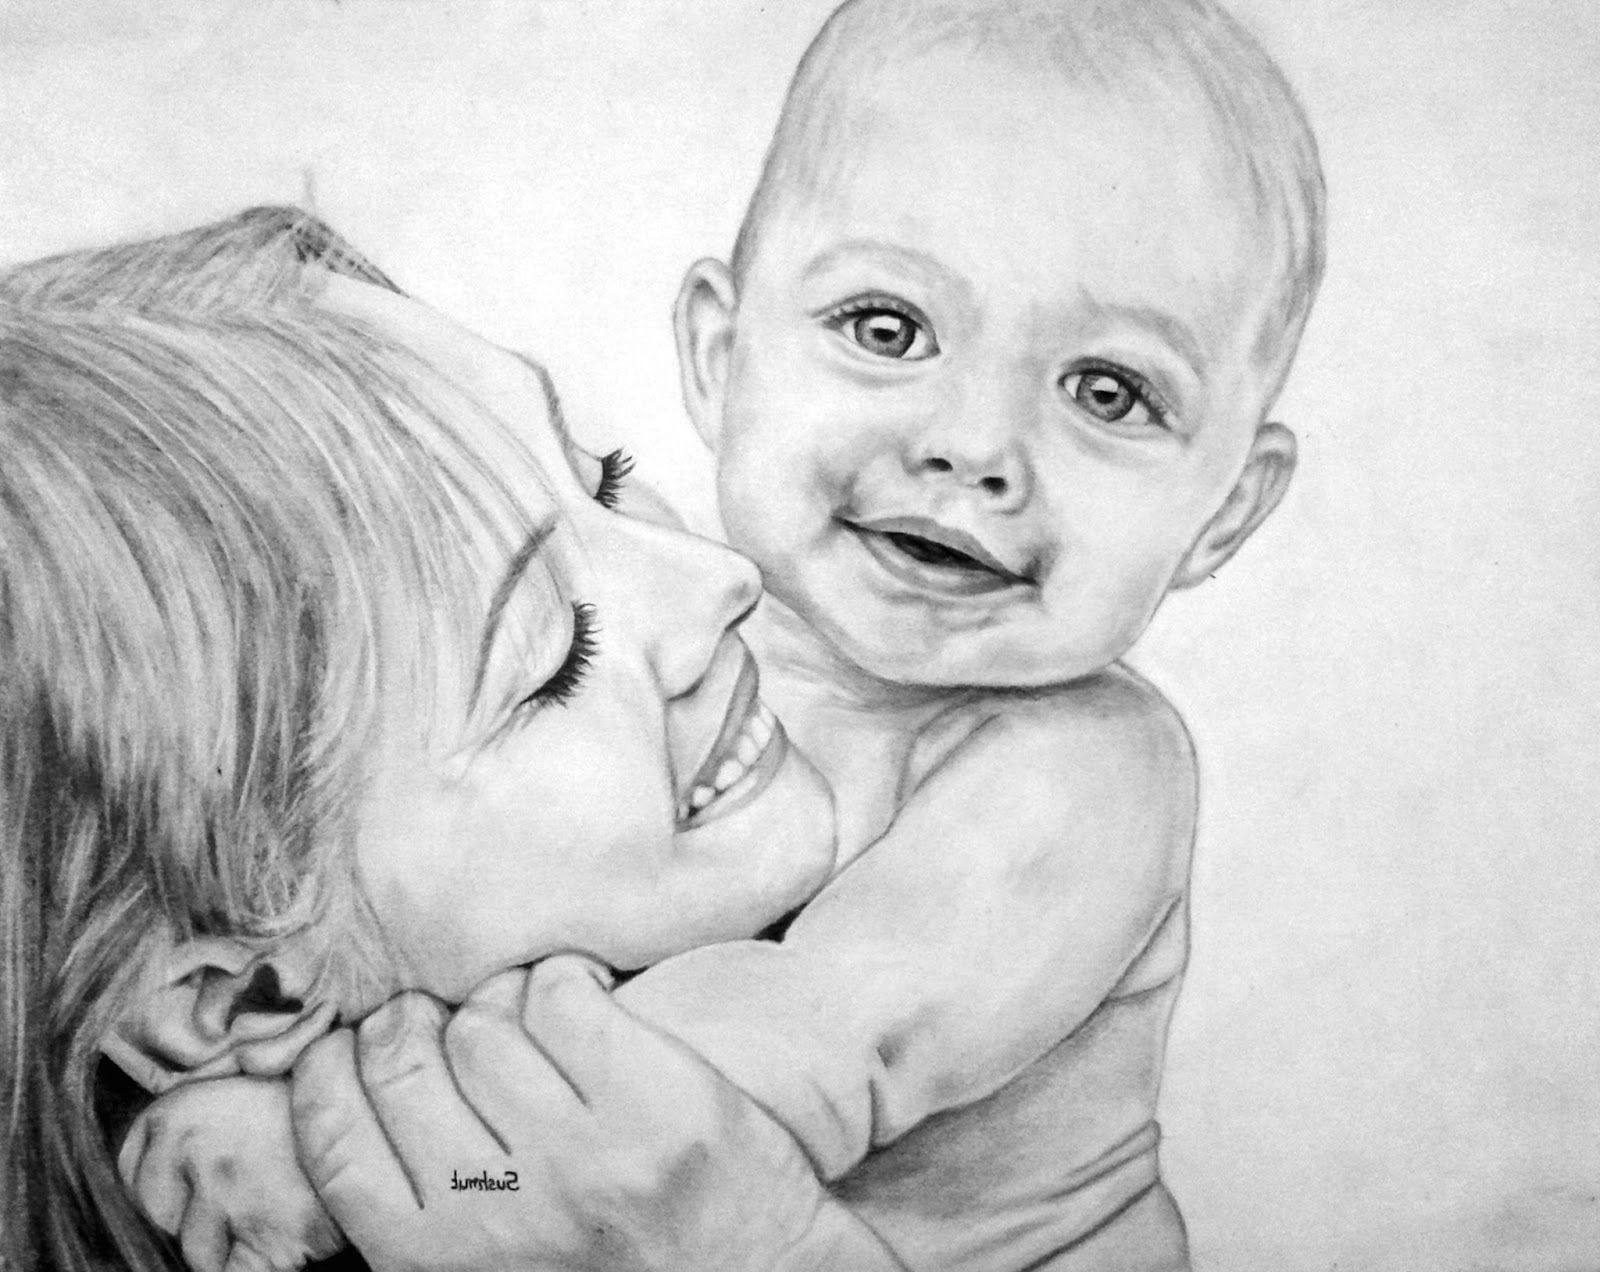 Рисунок мама карандашом красиво. Рисунок ко Дню матери. Рисунок для мамы. Рисунок на день матери карандашом. Рисунки для мамы очень красивые.